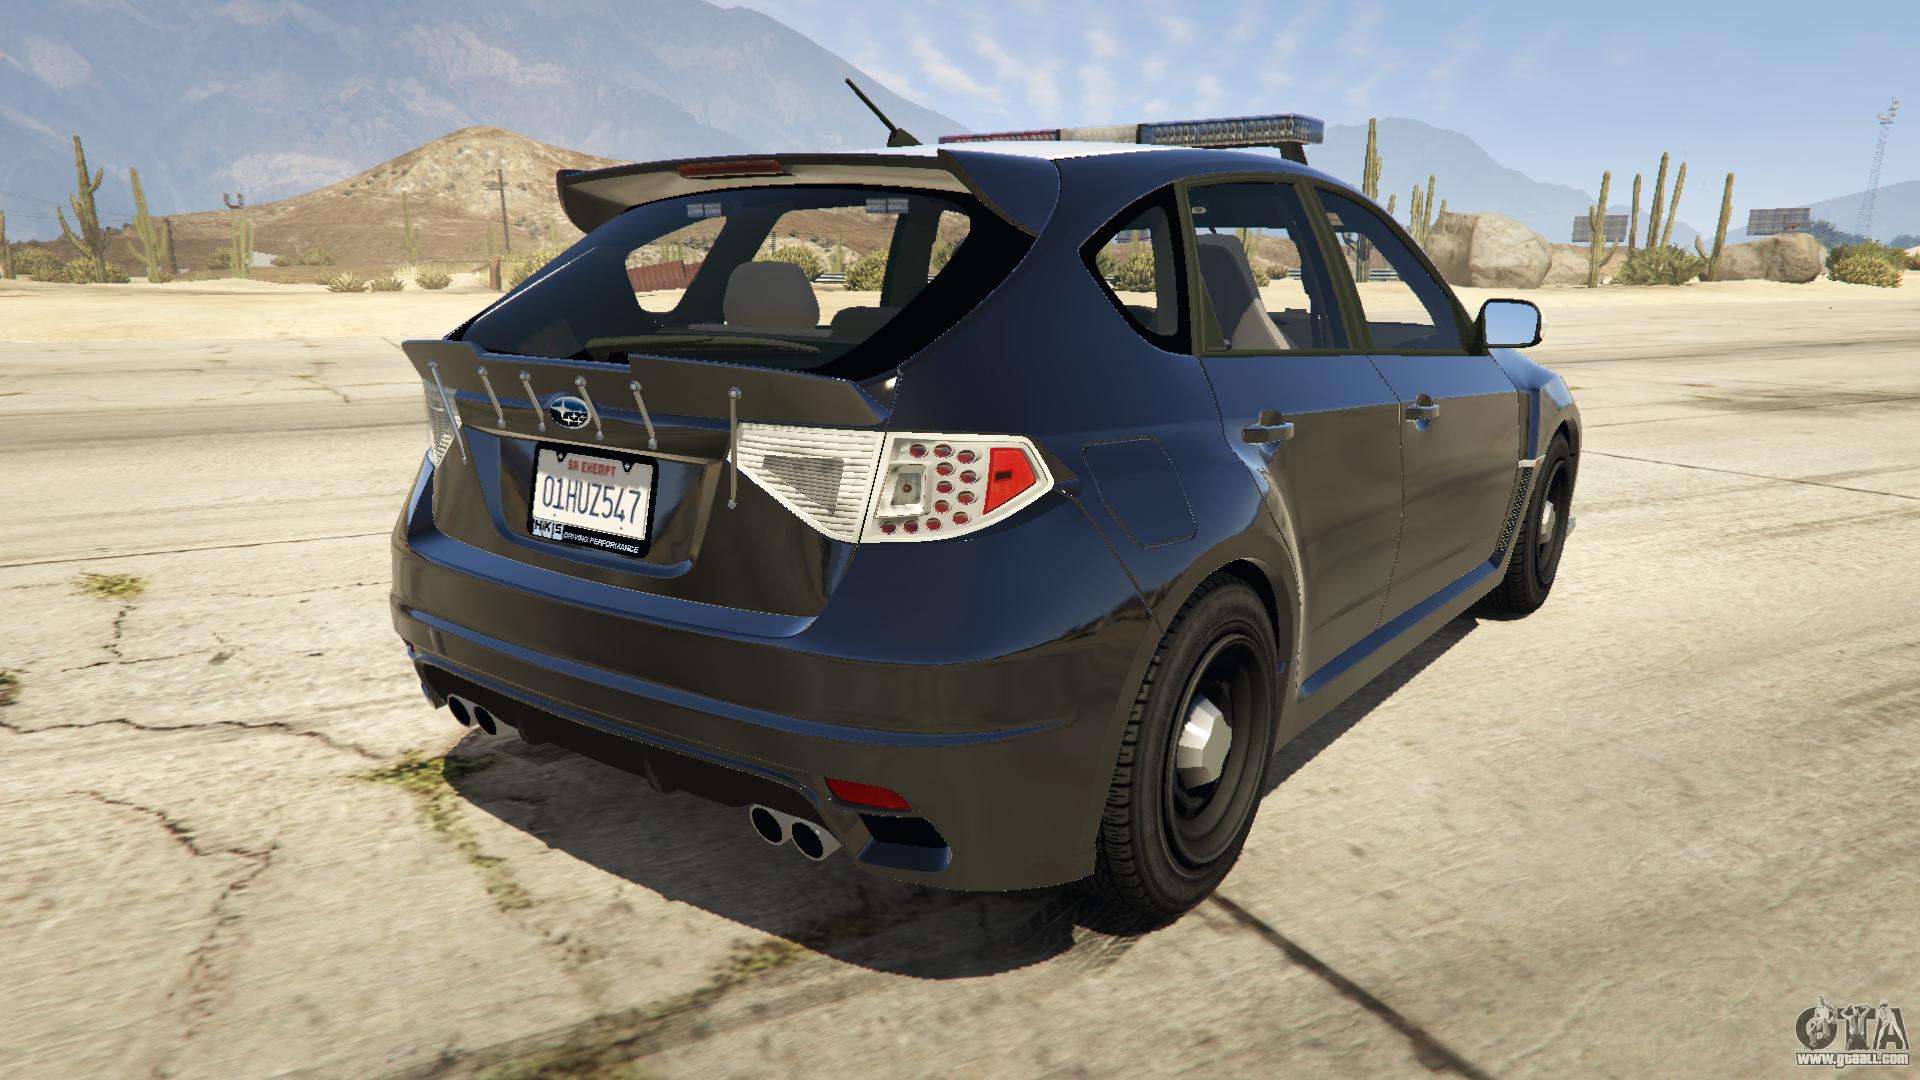 LAPD Subaru Impreza WRX STI for GTA 5